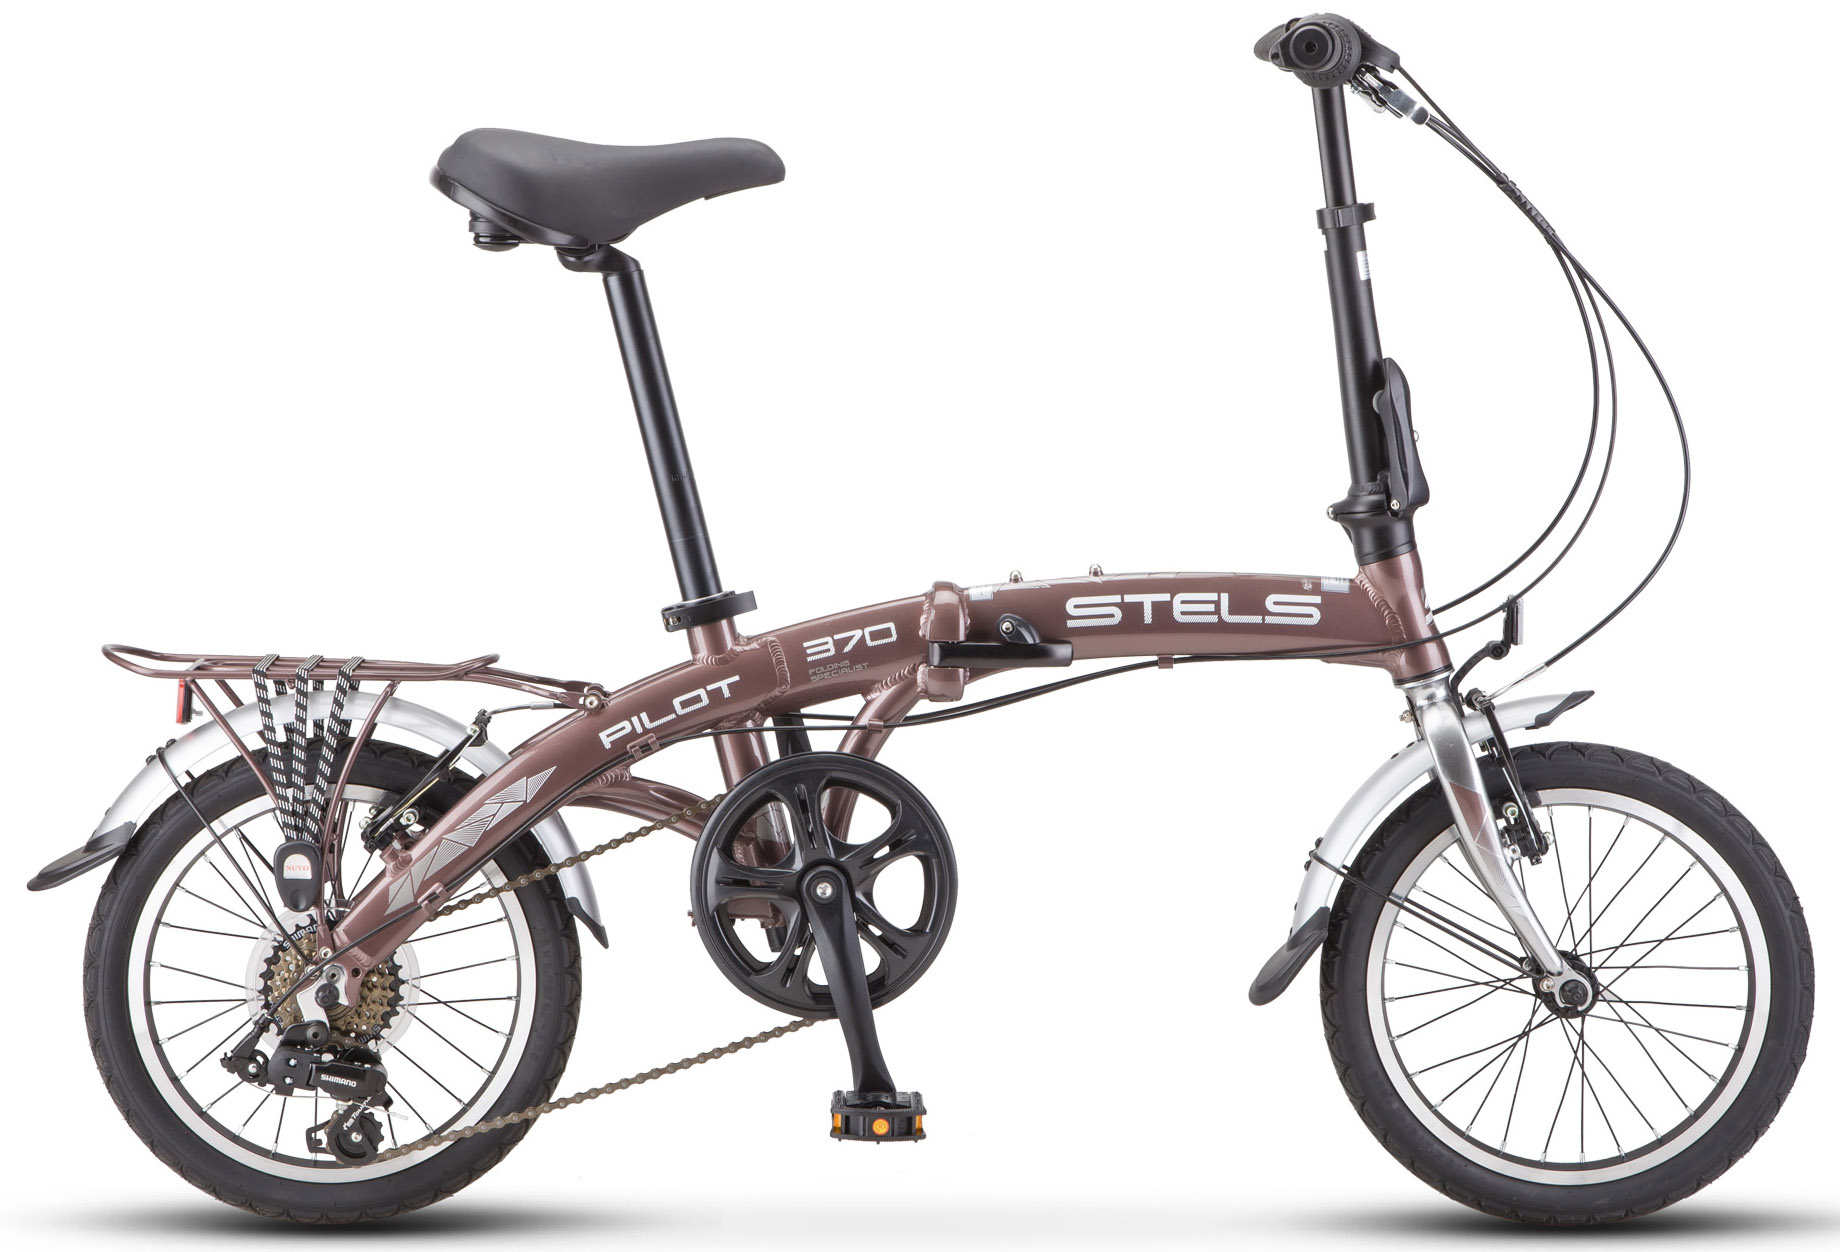  Велосипед Stels Pilot 370 16 (V010) 2019